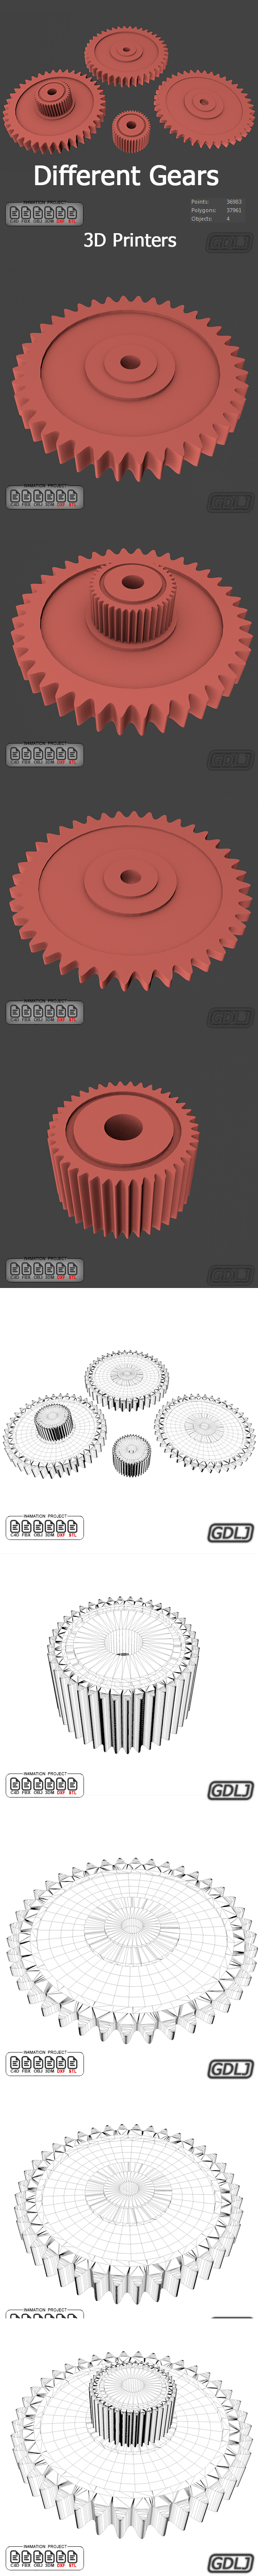 Different Gears 3D - 3Docean 21611059